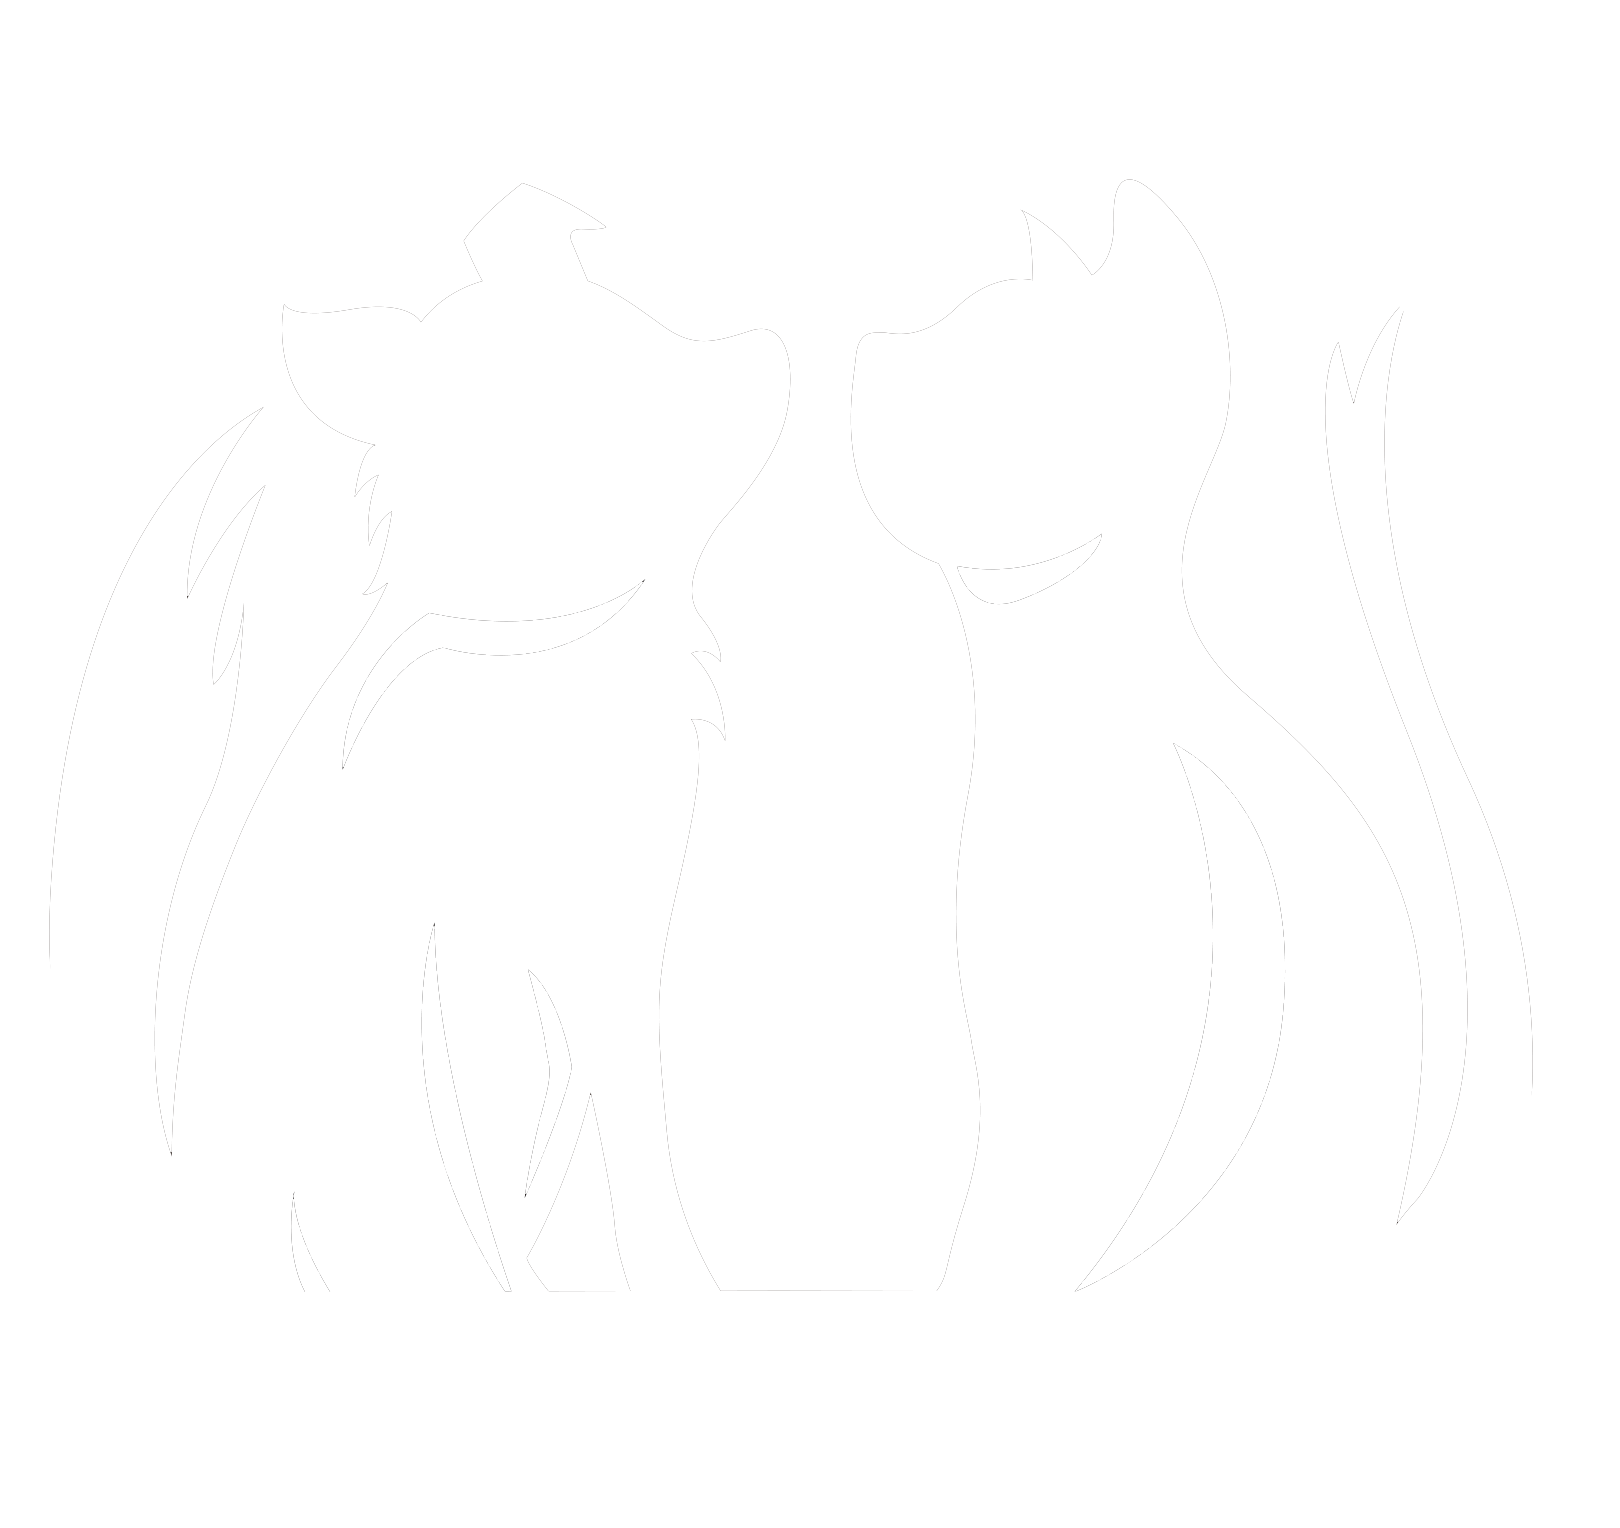 Silver Back